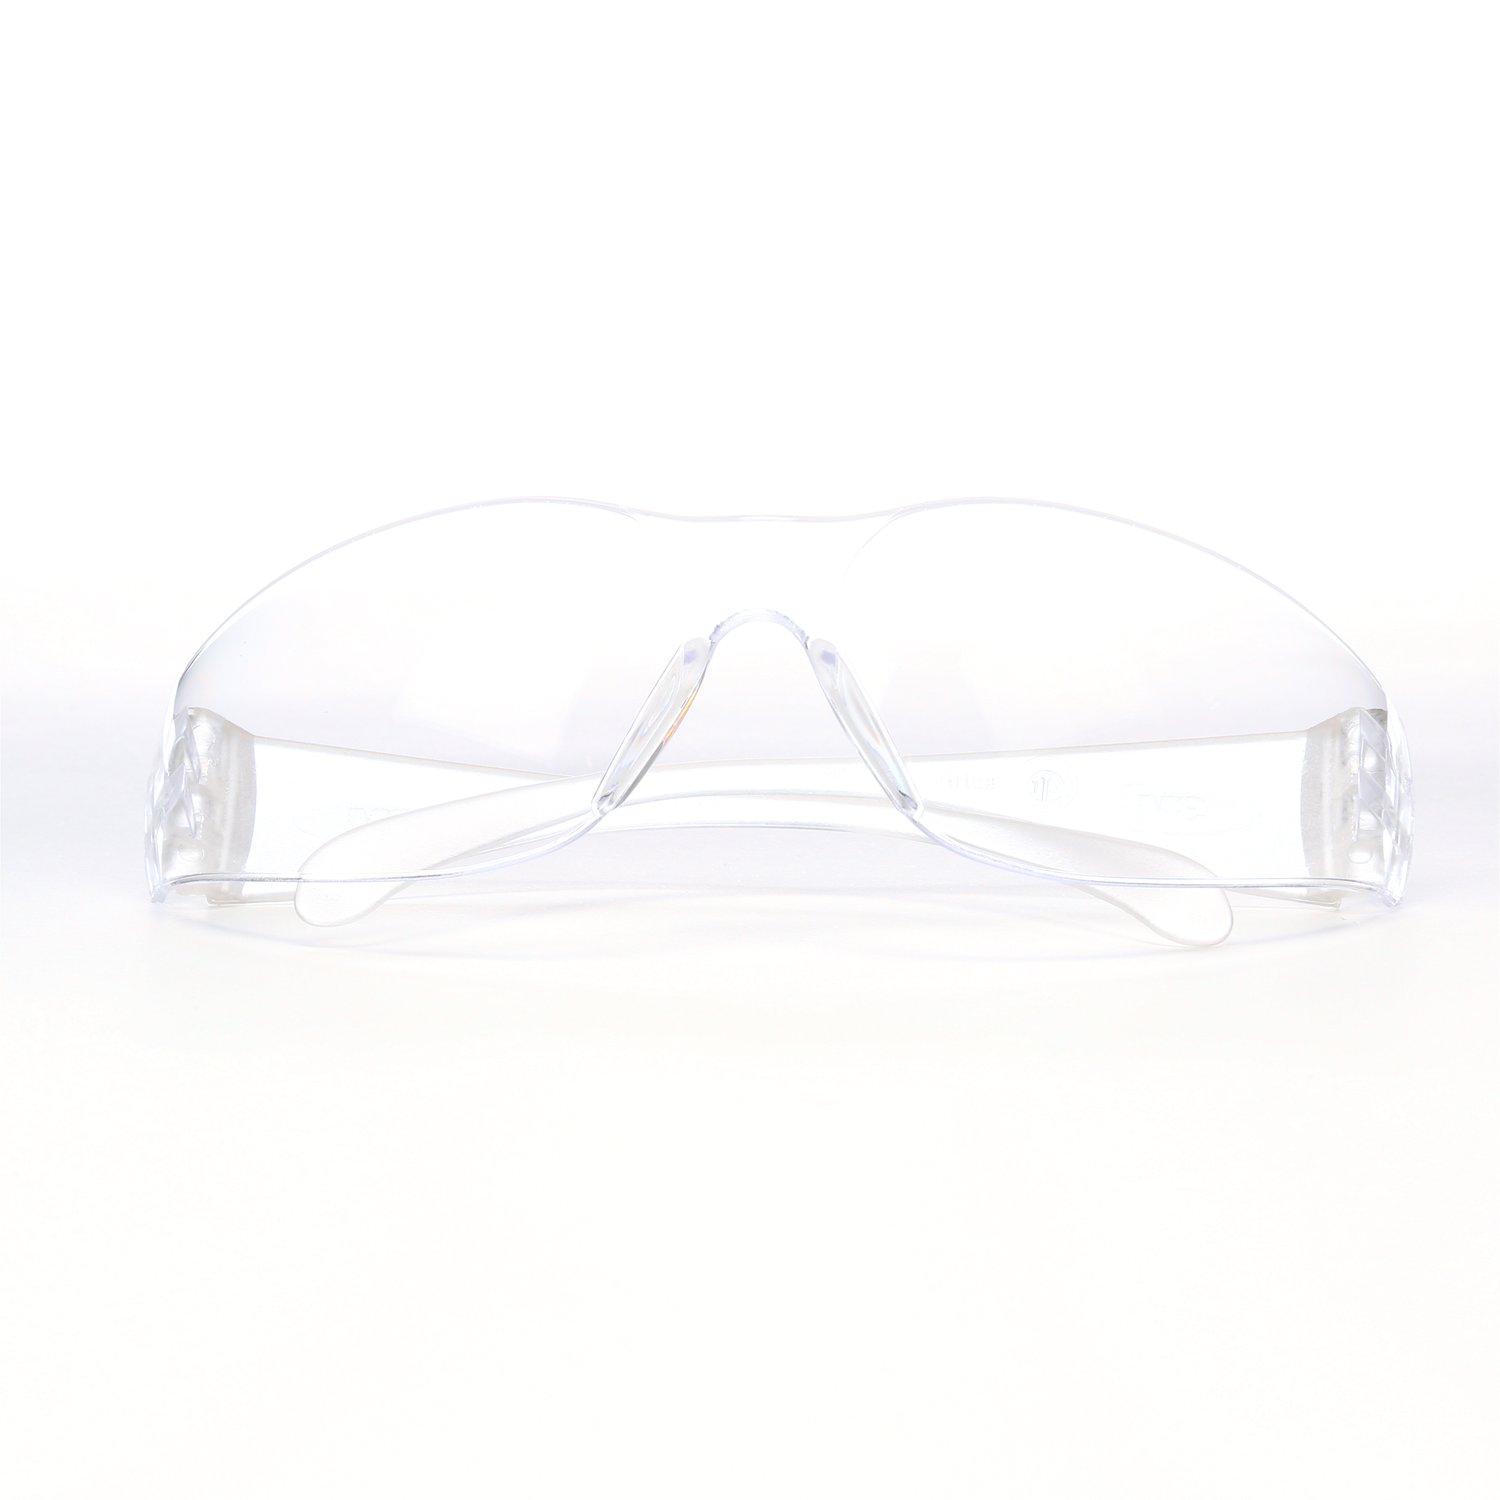 7100109223 - 3M Virtua Protective Eyewear 11326-00000-20 Clear Temples Clear Hard
Coat Lens, 20 EA/Case